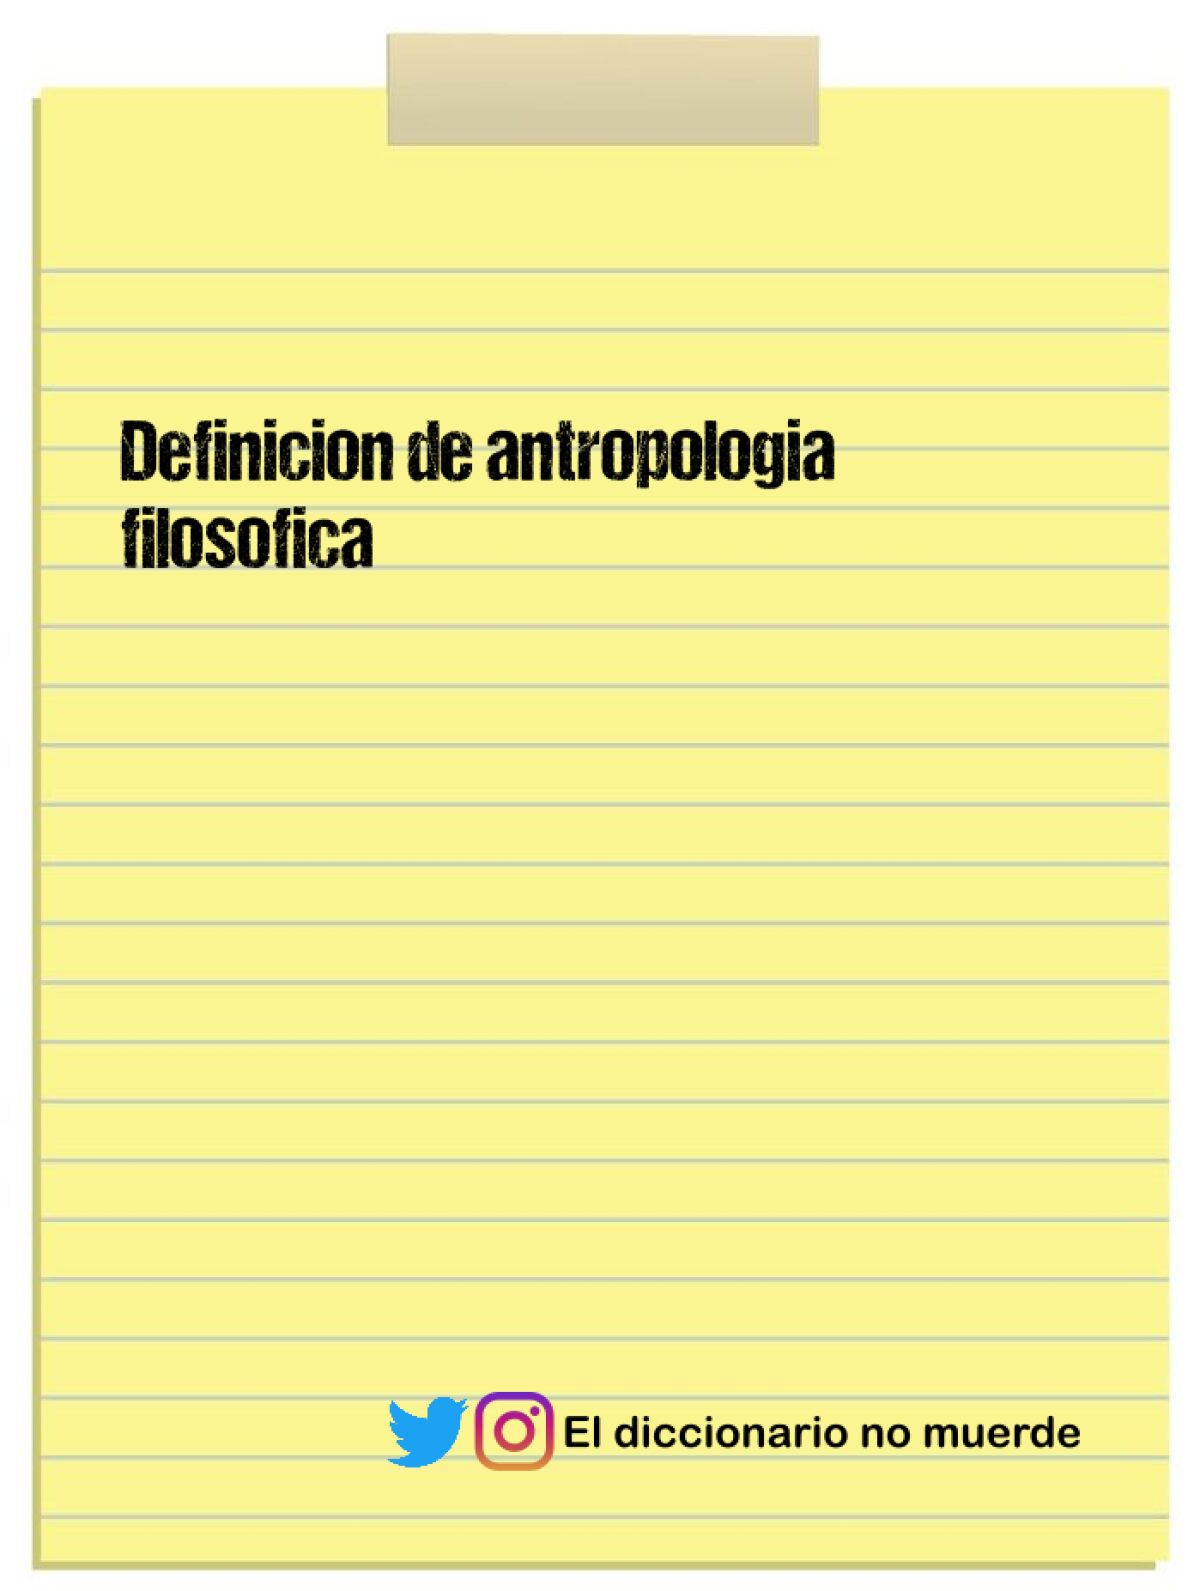 Definicion de antropologia filosofica